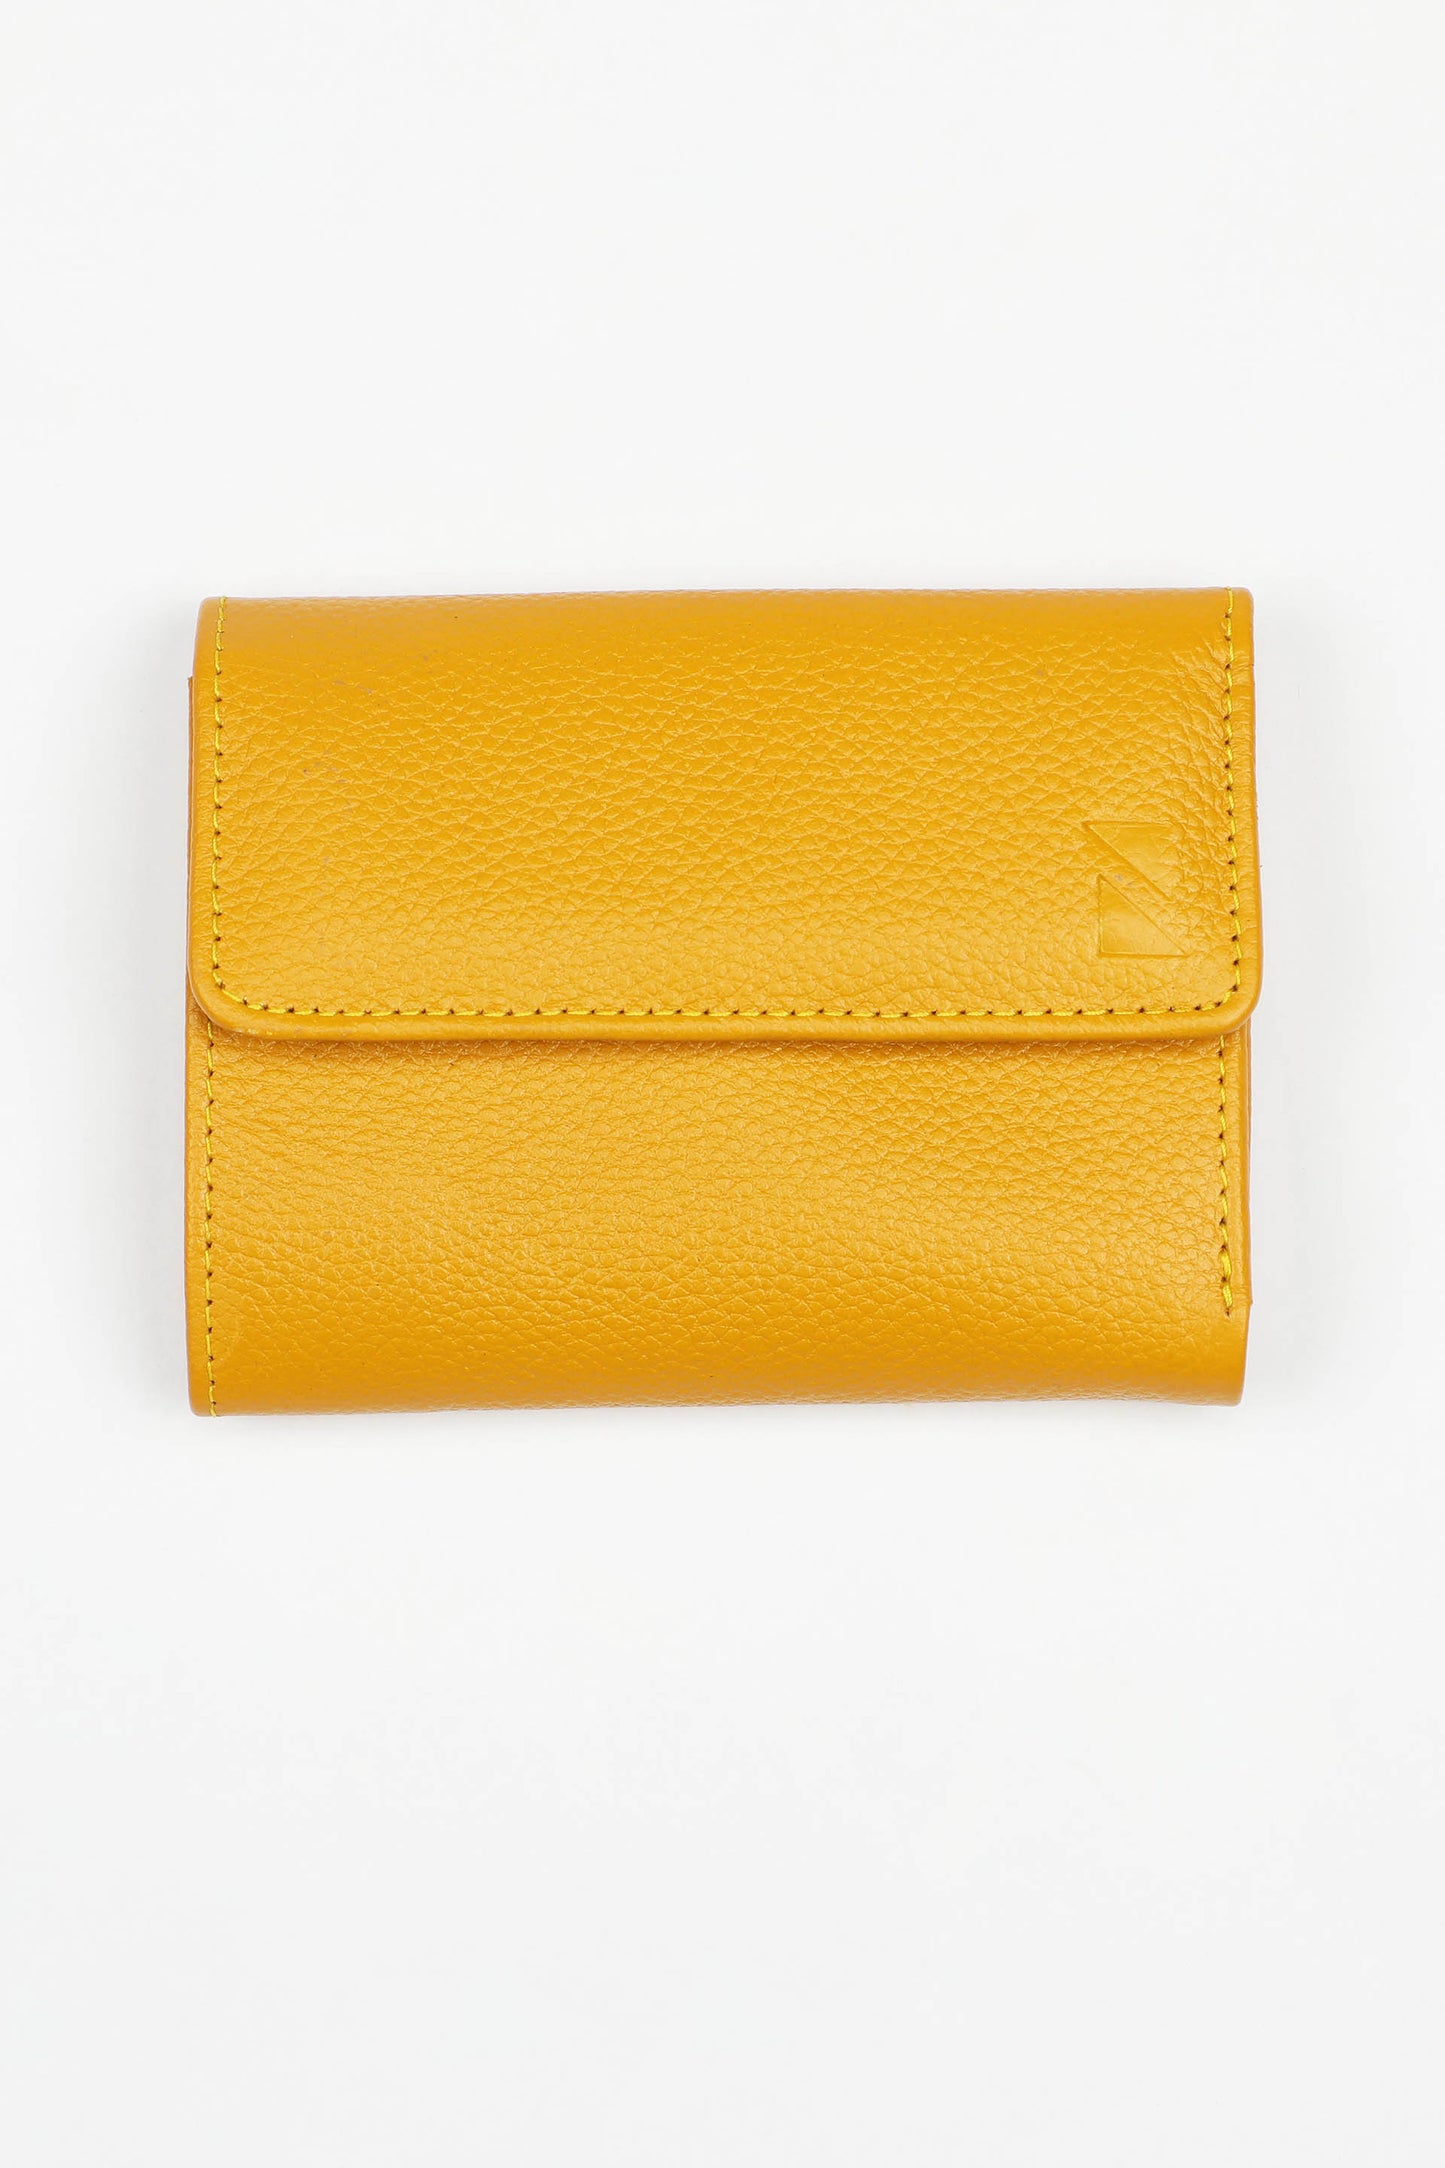 Purse Wallet Yellow